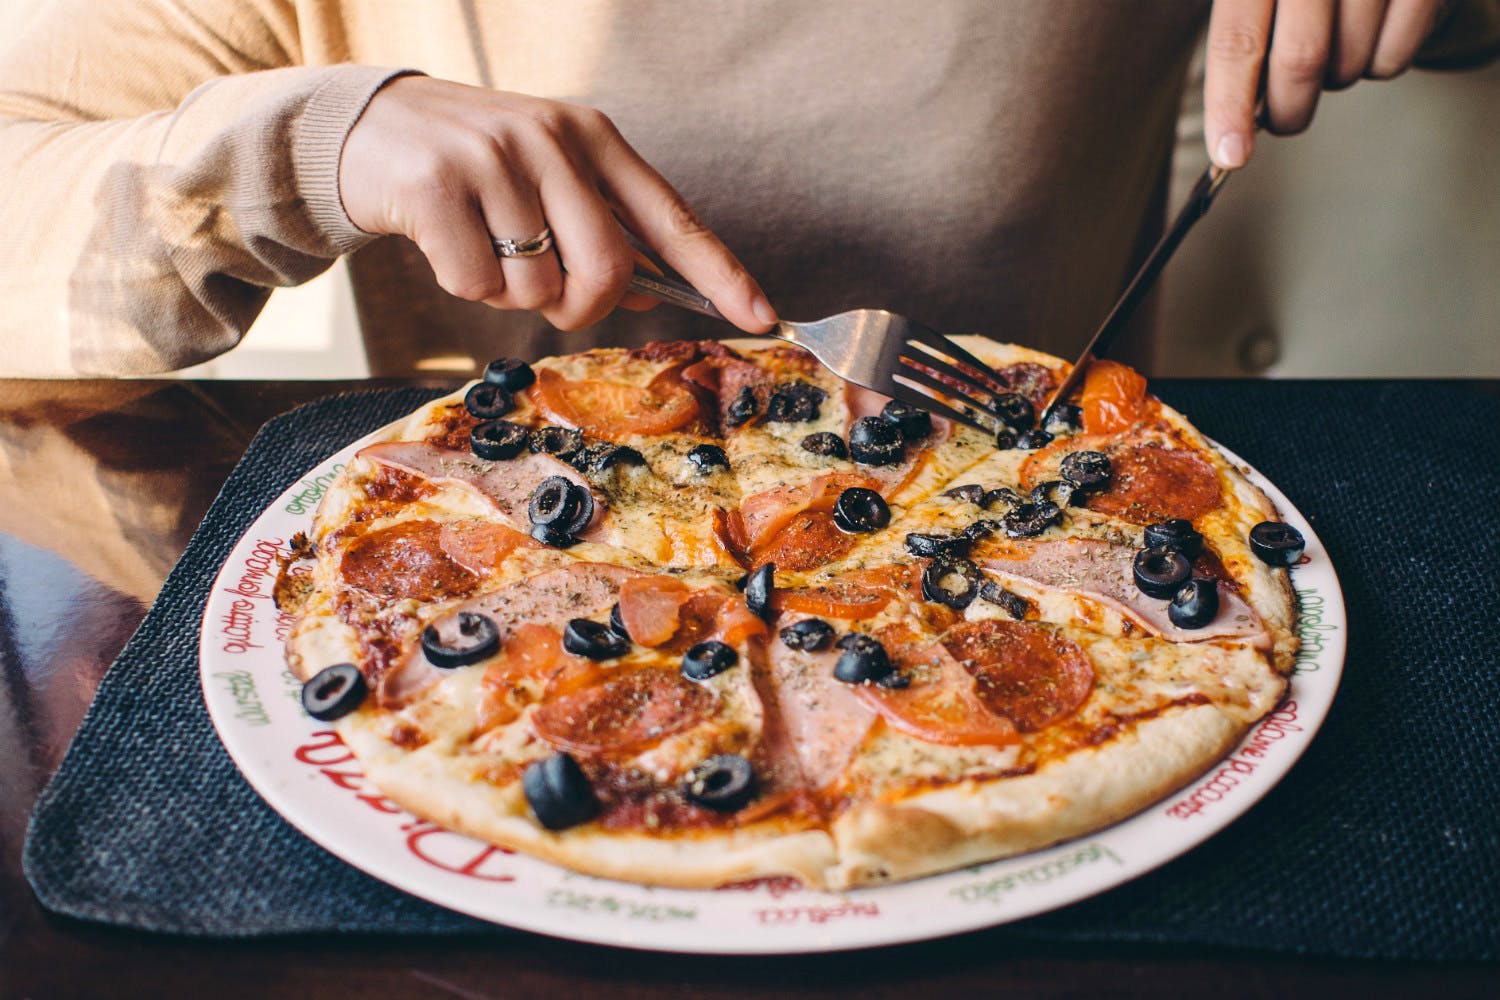 Dish,Food,Cuisine,Pizza,Pizza cheese,Junk food,Ingredient,California-style pizza,Flatbread,Italian food